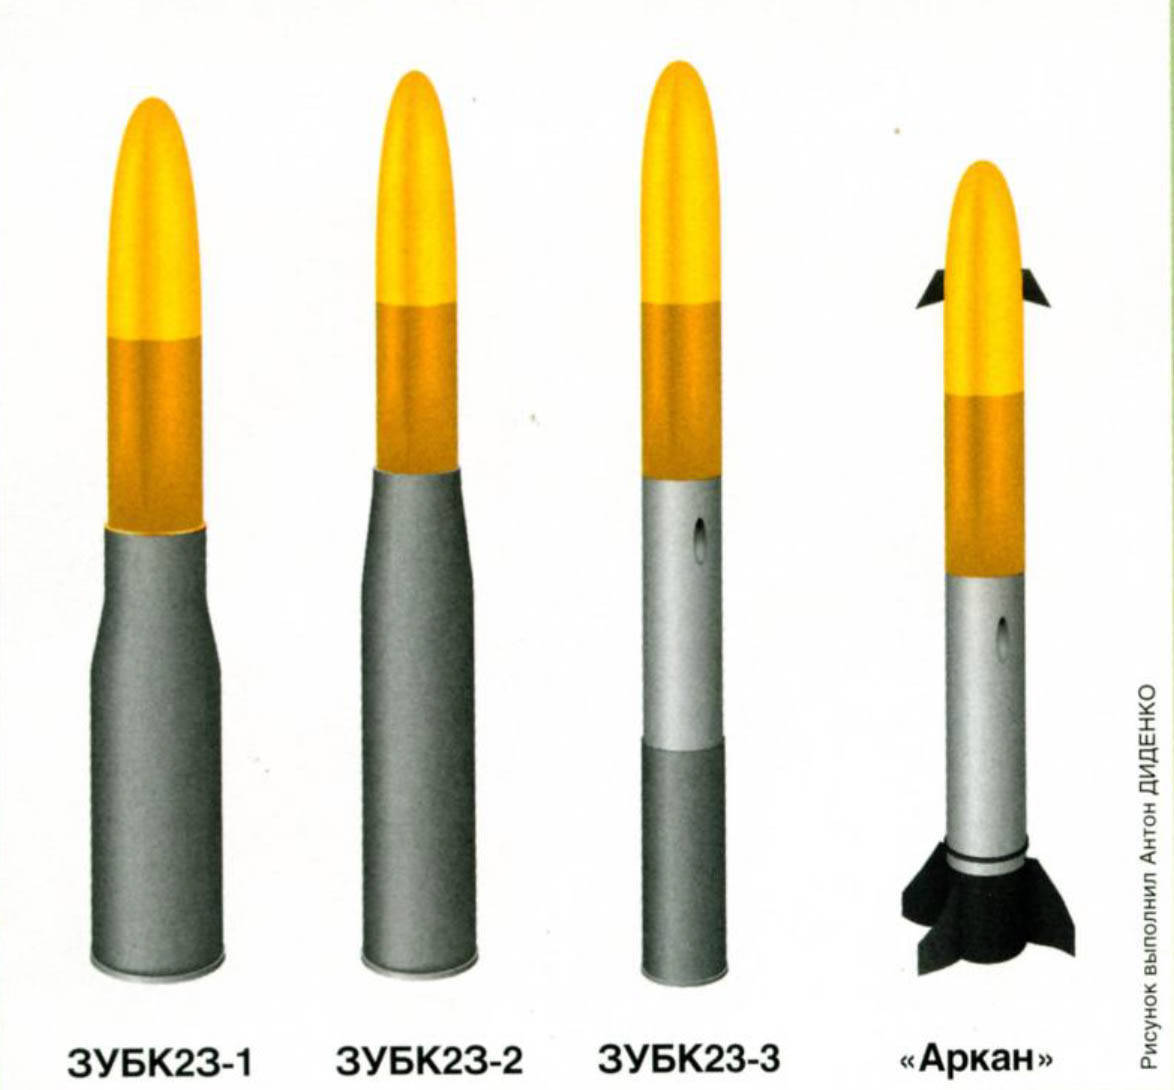 Ракетные снаряды митяев. 3убк23-3. 9м117 кастет. 9м117м1-3 "Аркан". 3убк23-3 Аркан.